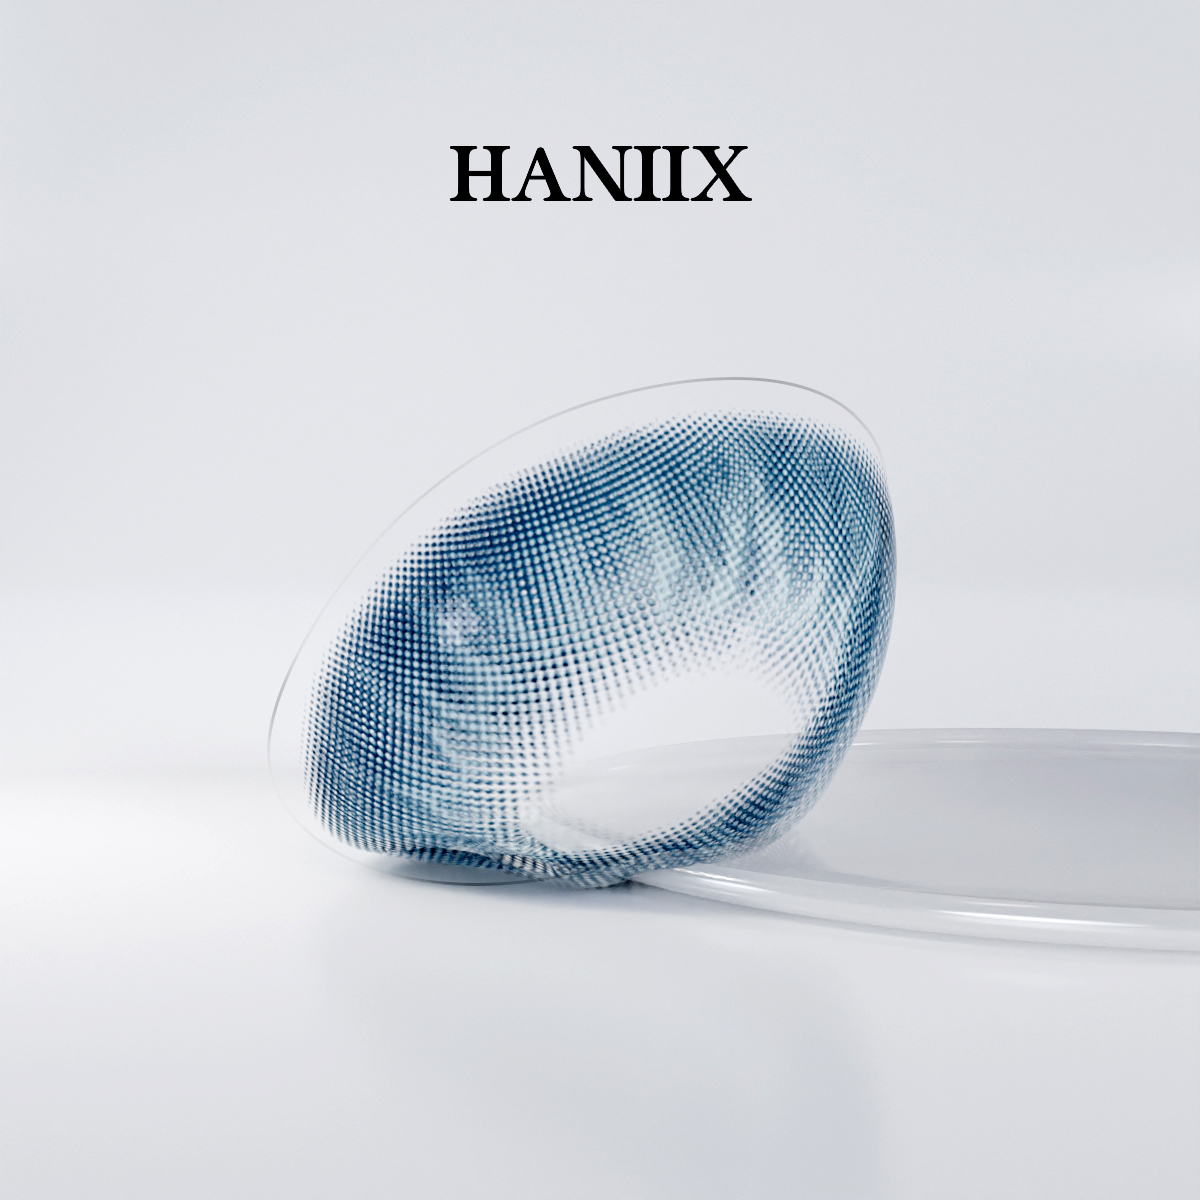 Glitter Blue - Yearly, 2 lenses - HANIIX